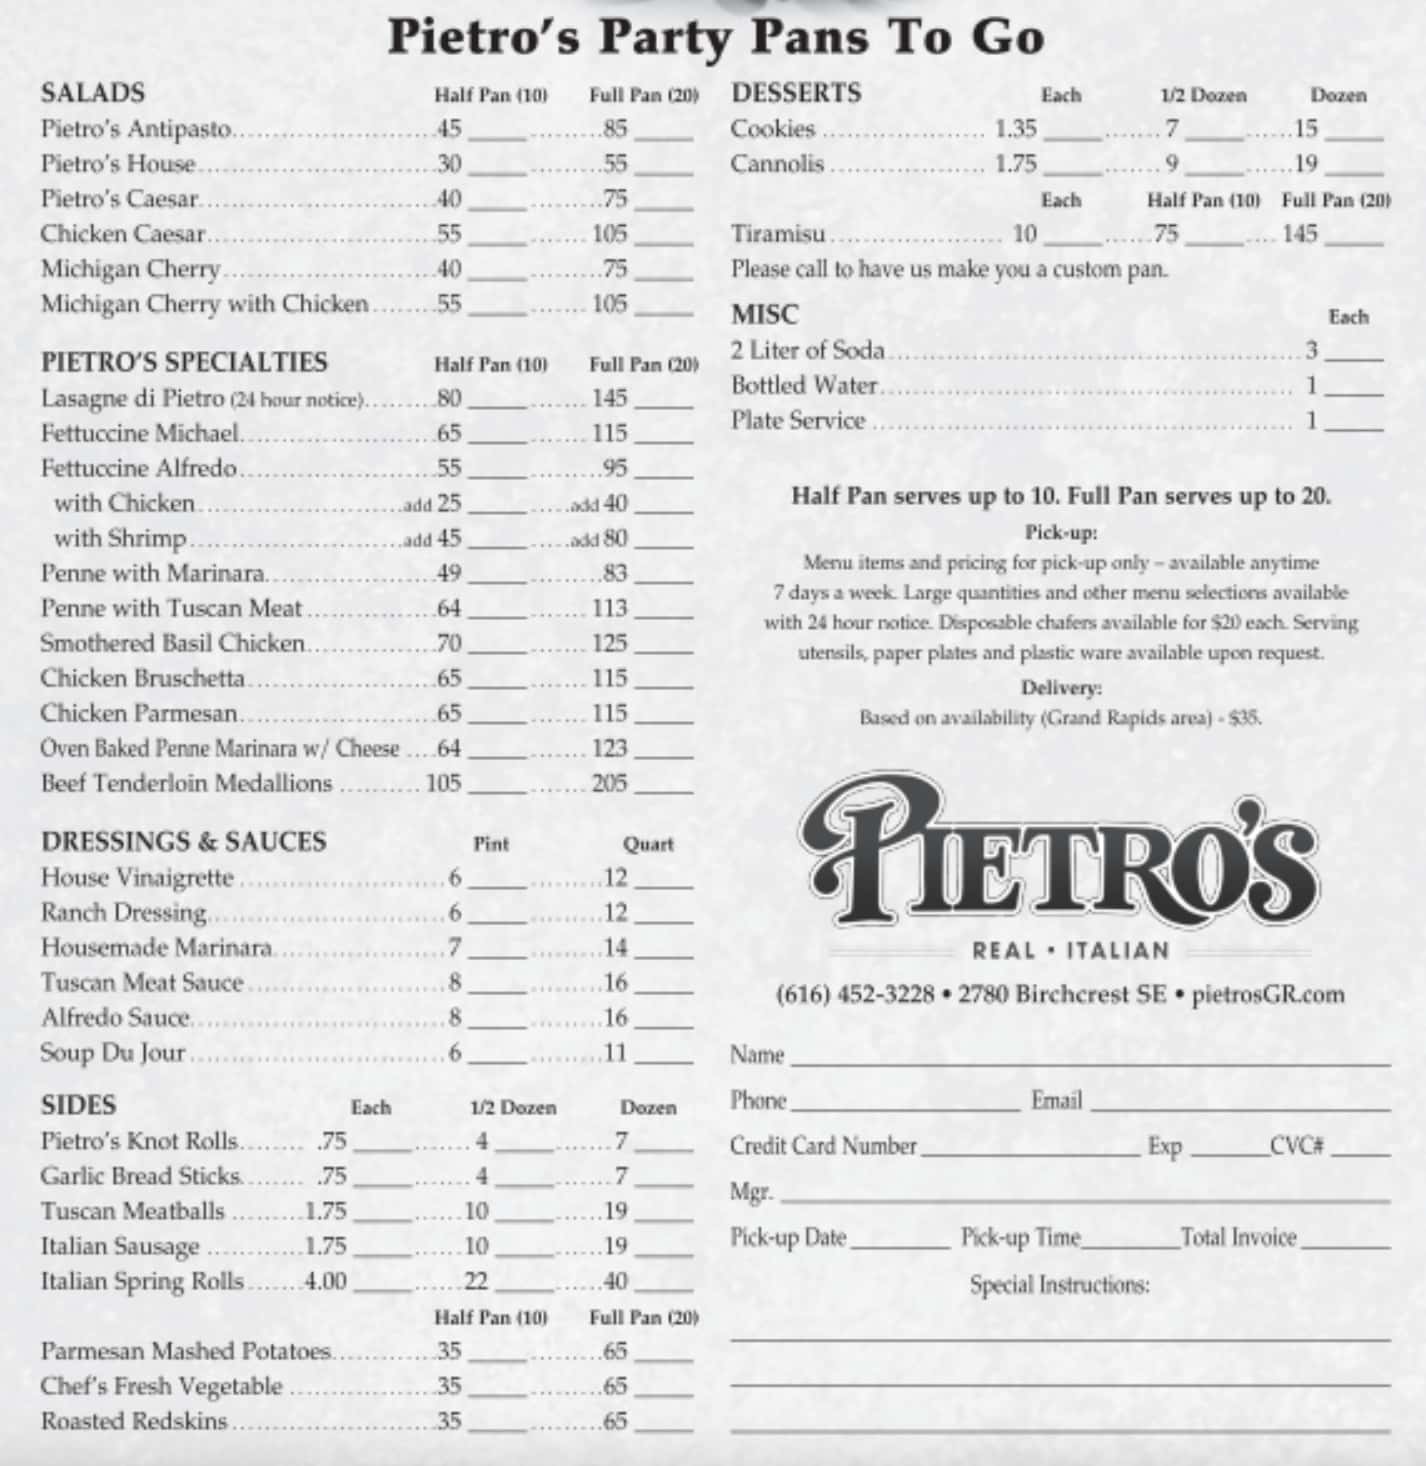 Pietro's Italian Restaurant Party Pans To Go Menu